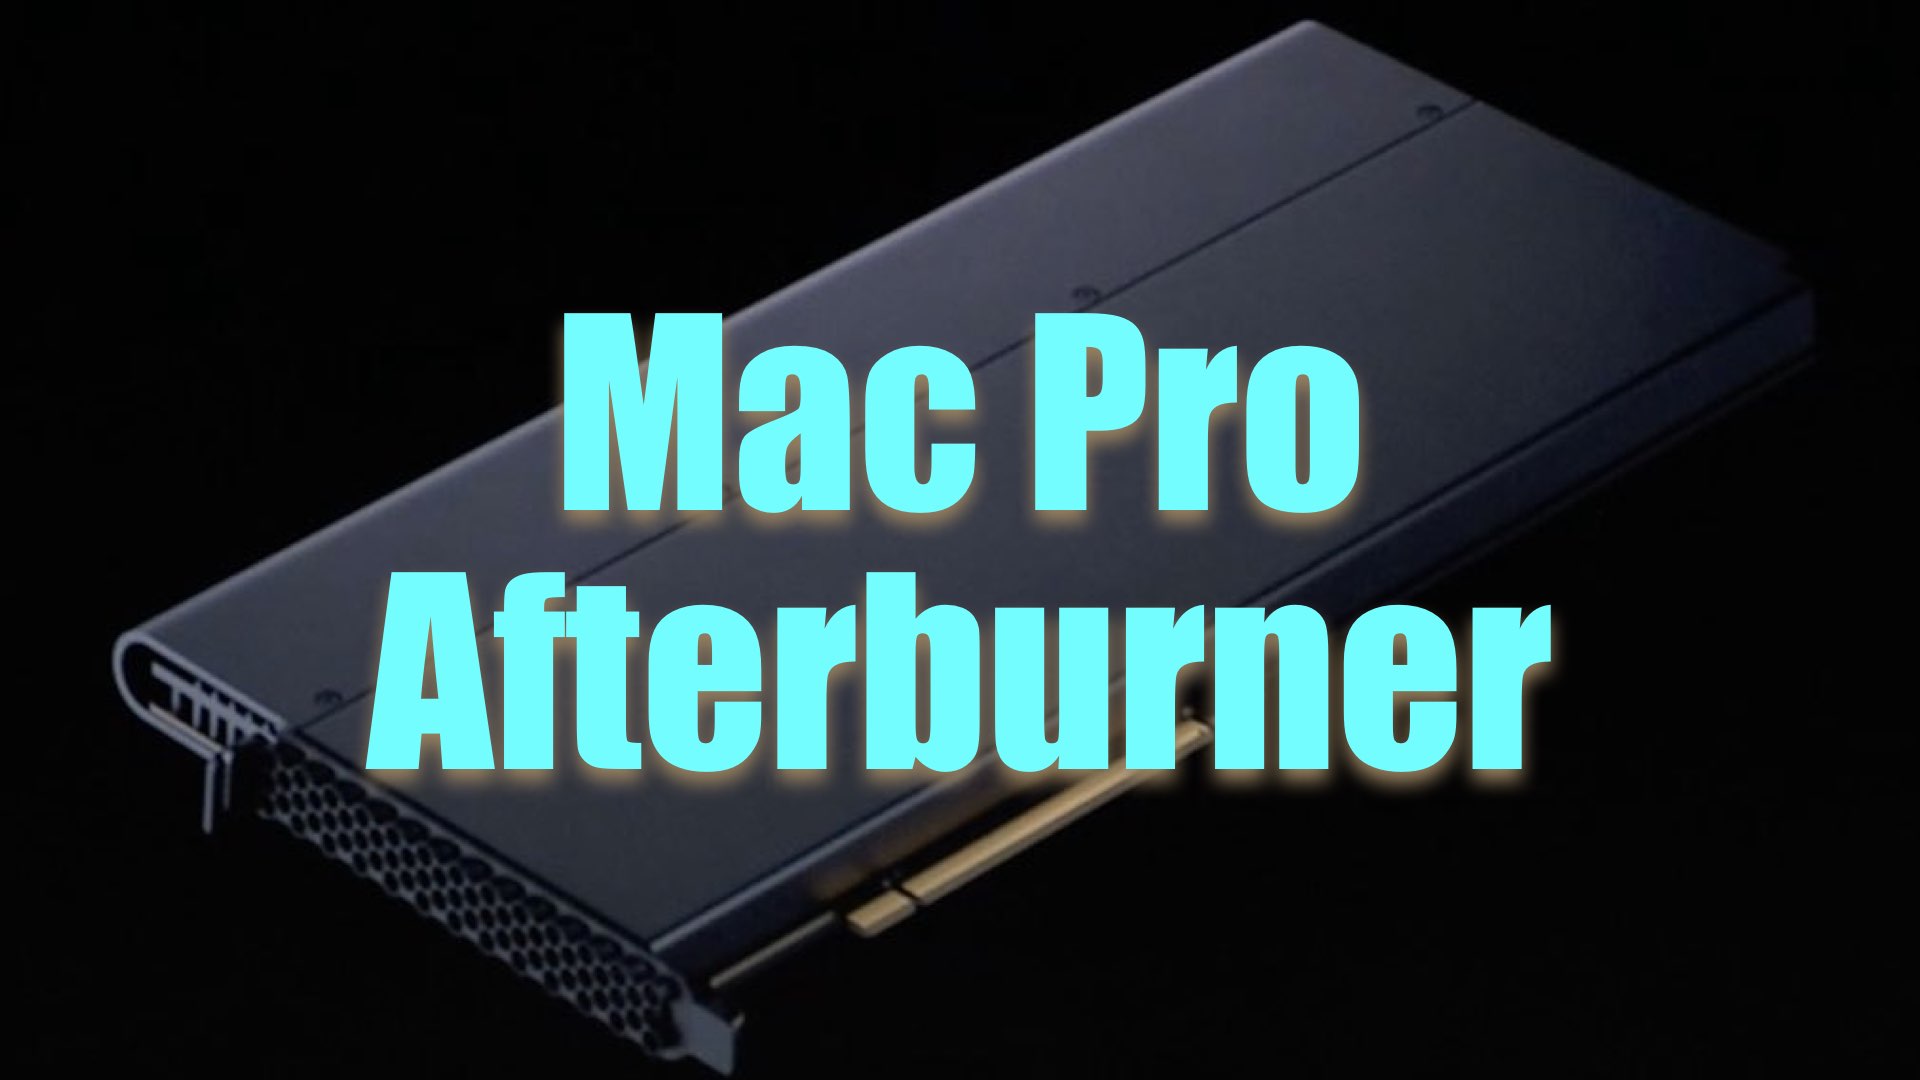 Apple's Mac Pro Afterburner